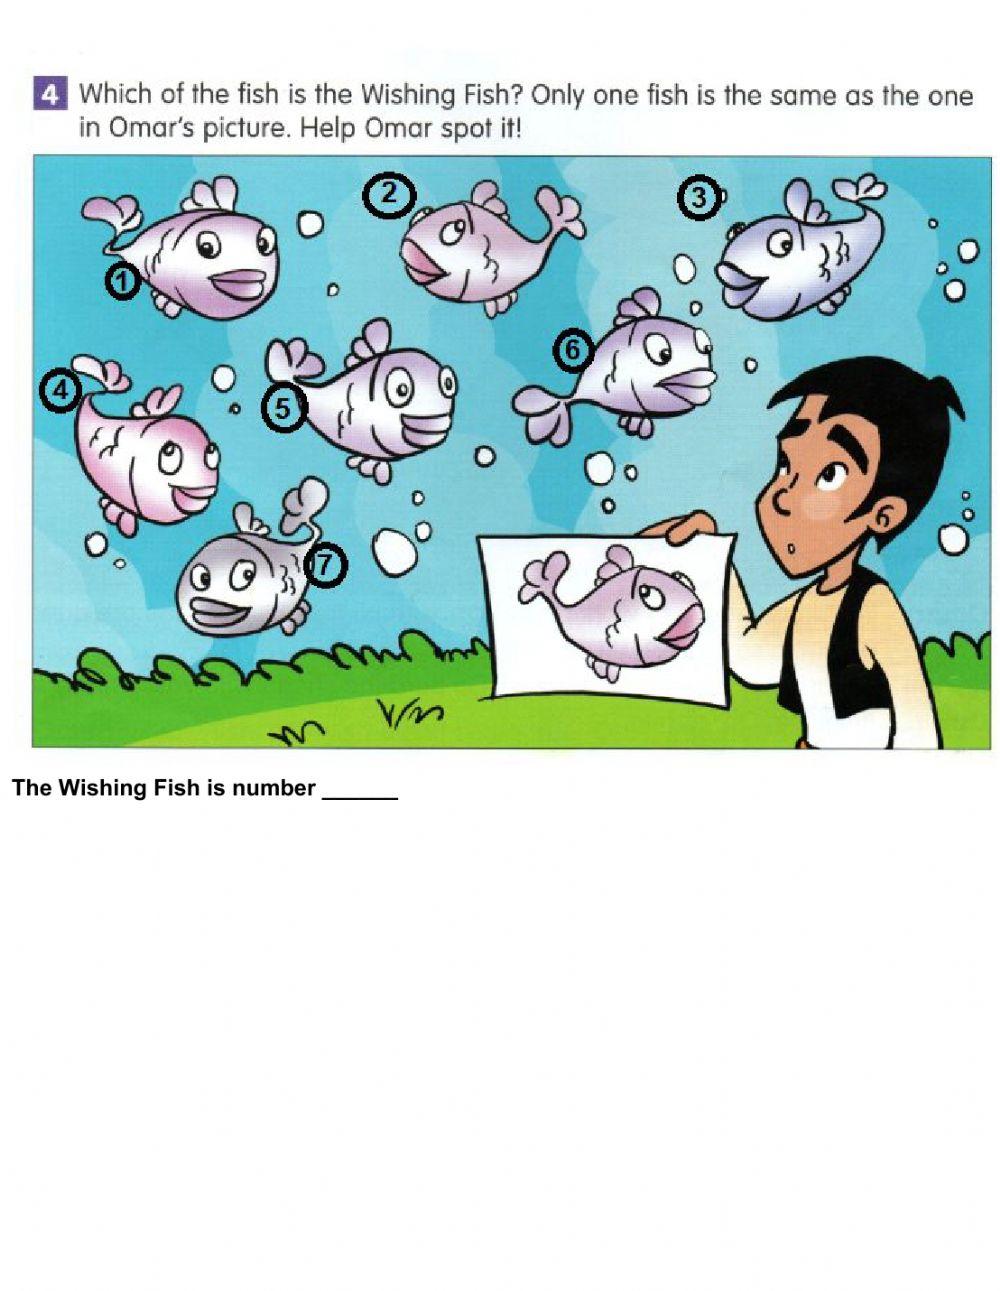 The Wishing Fish